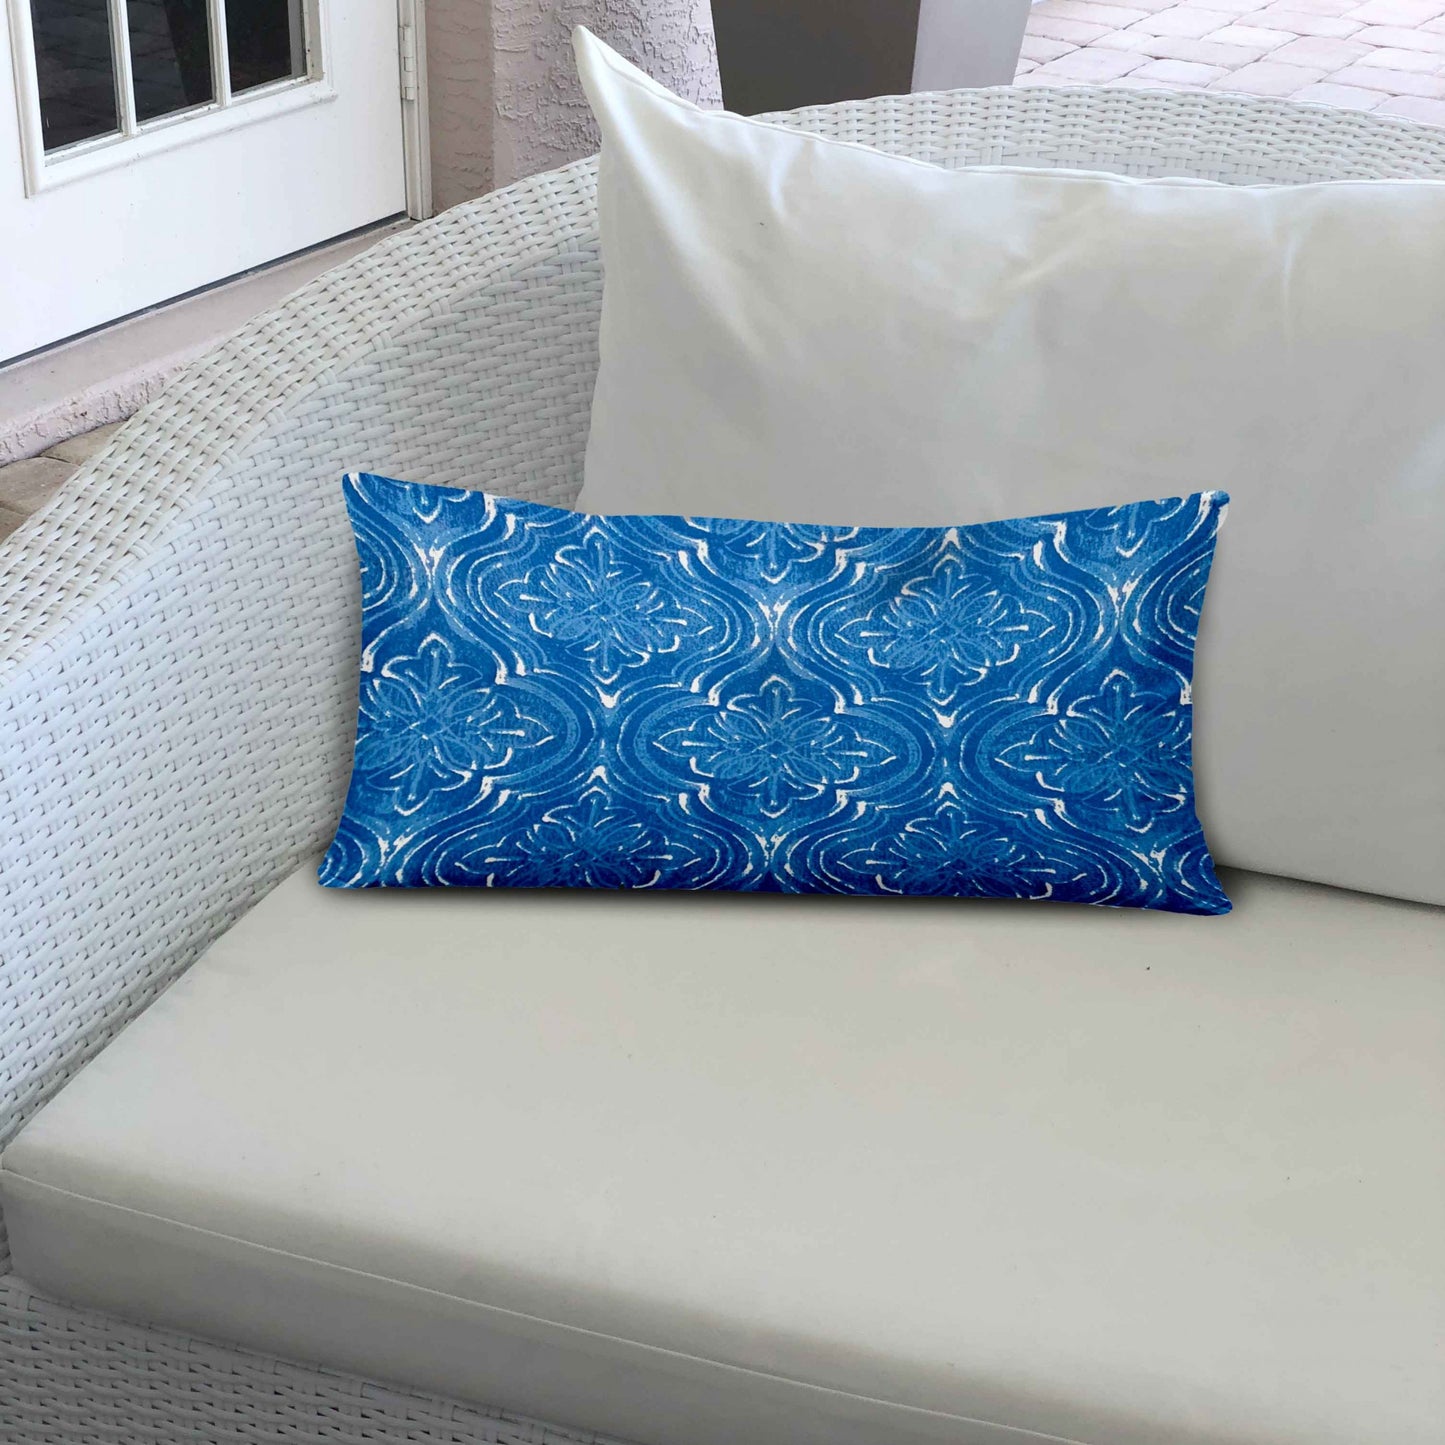 12" X 18" Blue And White Enveloped Ikat Lumbar Indoor Outdoor Pillow